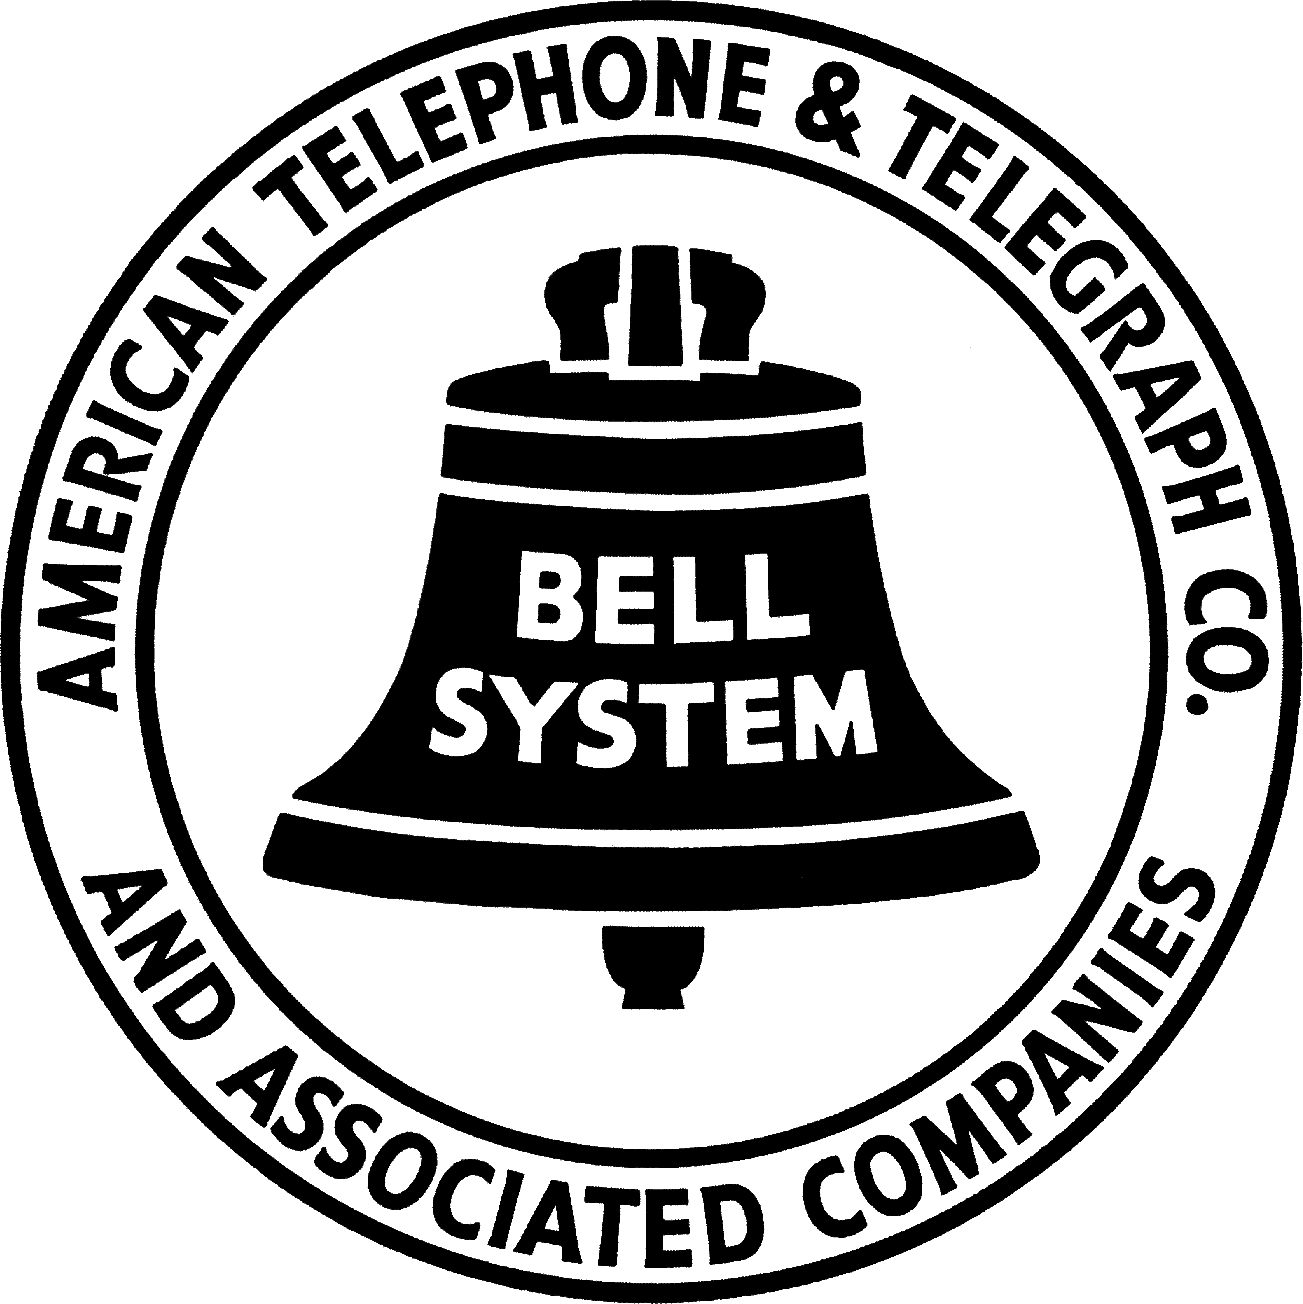 Old Phone Company Logo - Bell Telephone Company | Bell System | Telephone, Belle, Old phone